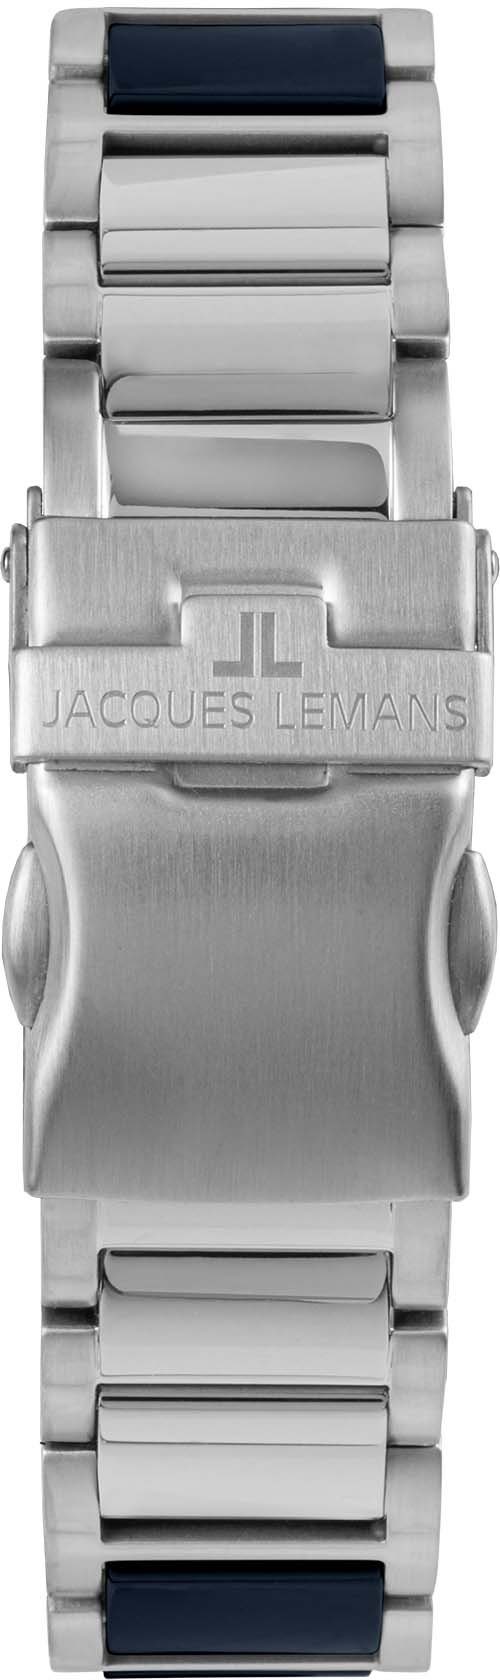 42-10B Keramikuhr Jacques Liverpool, Lemans